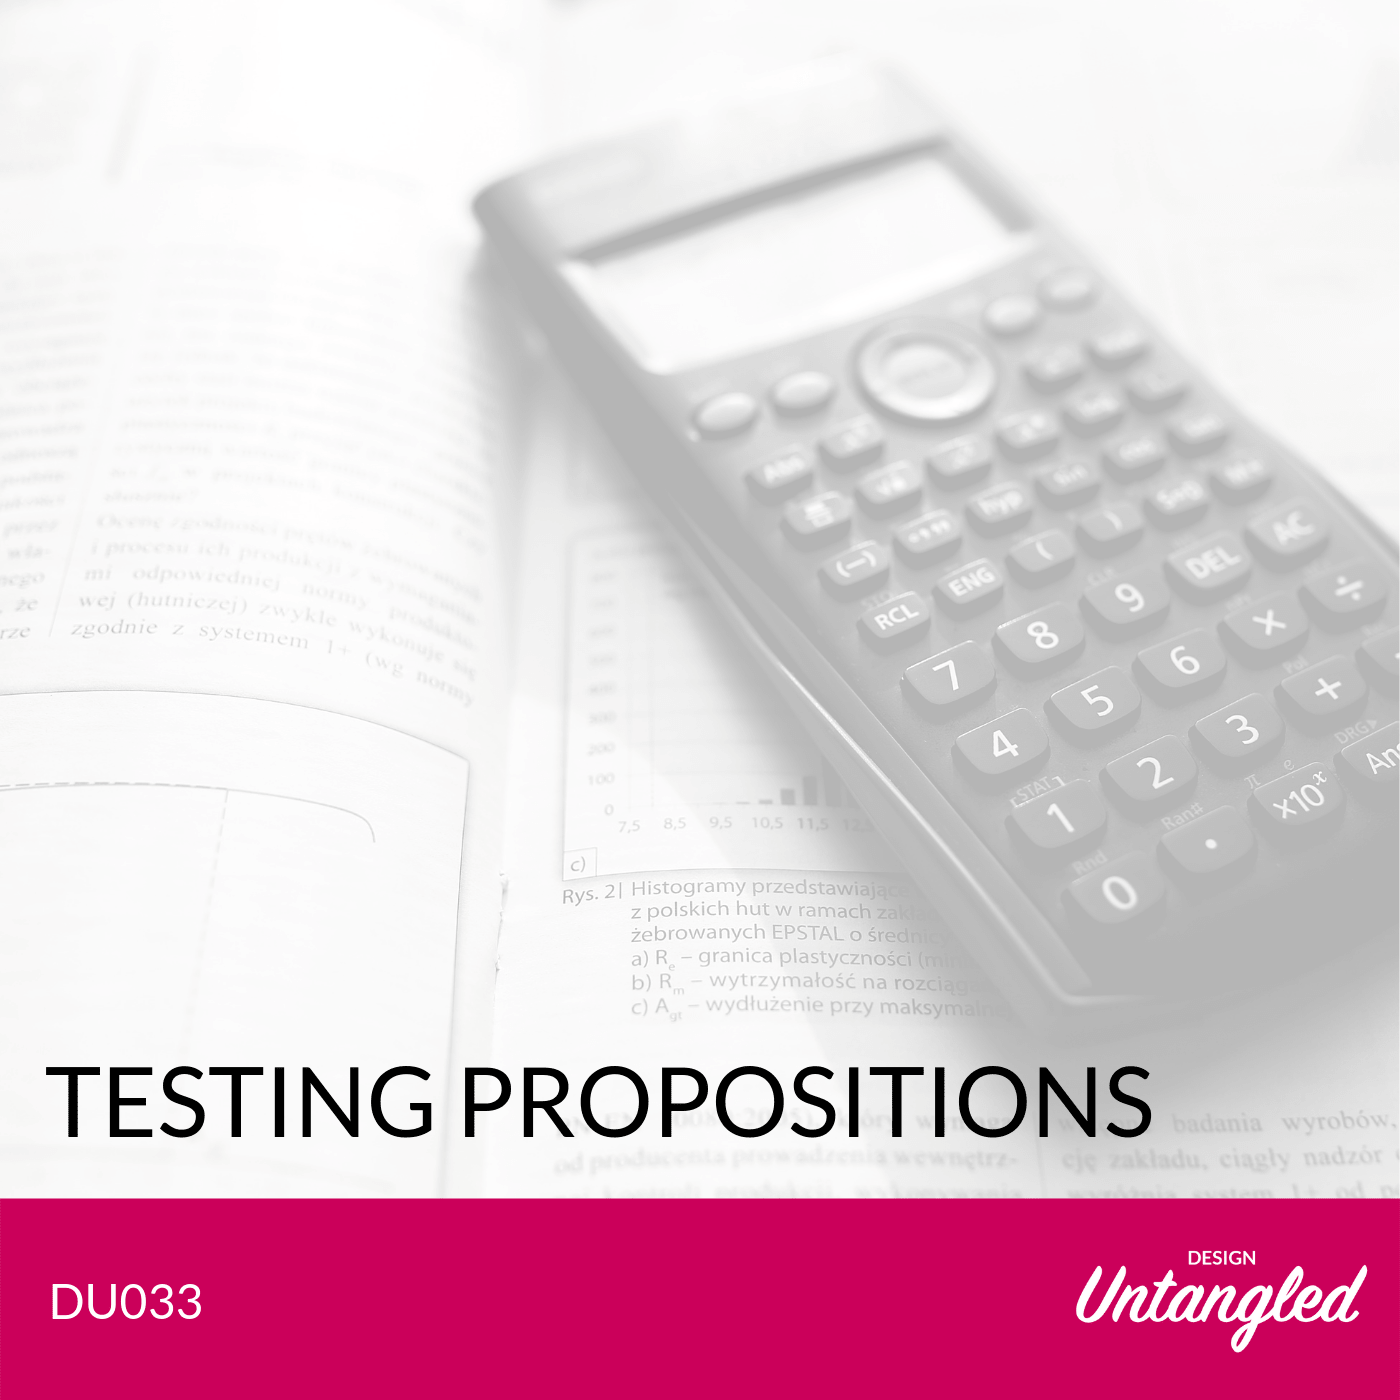 DU033 – Testing Propositions